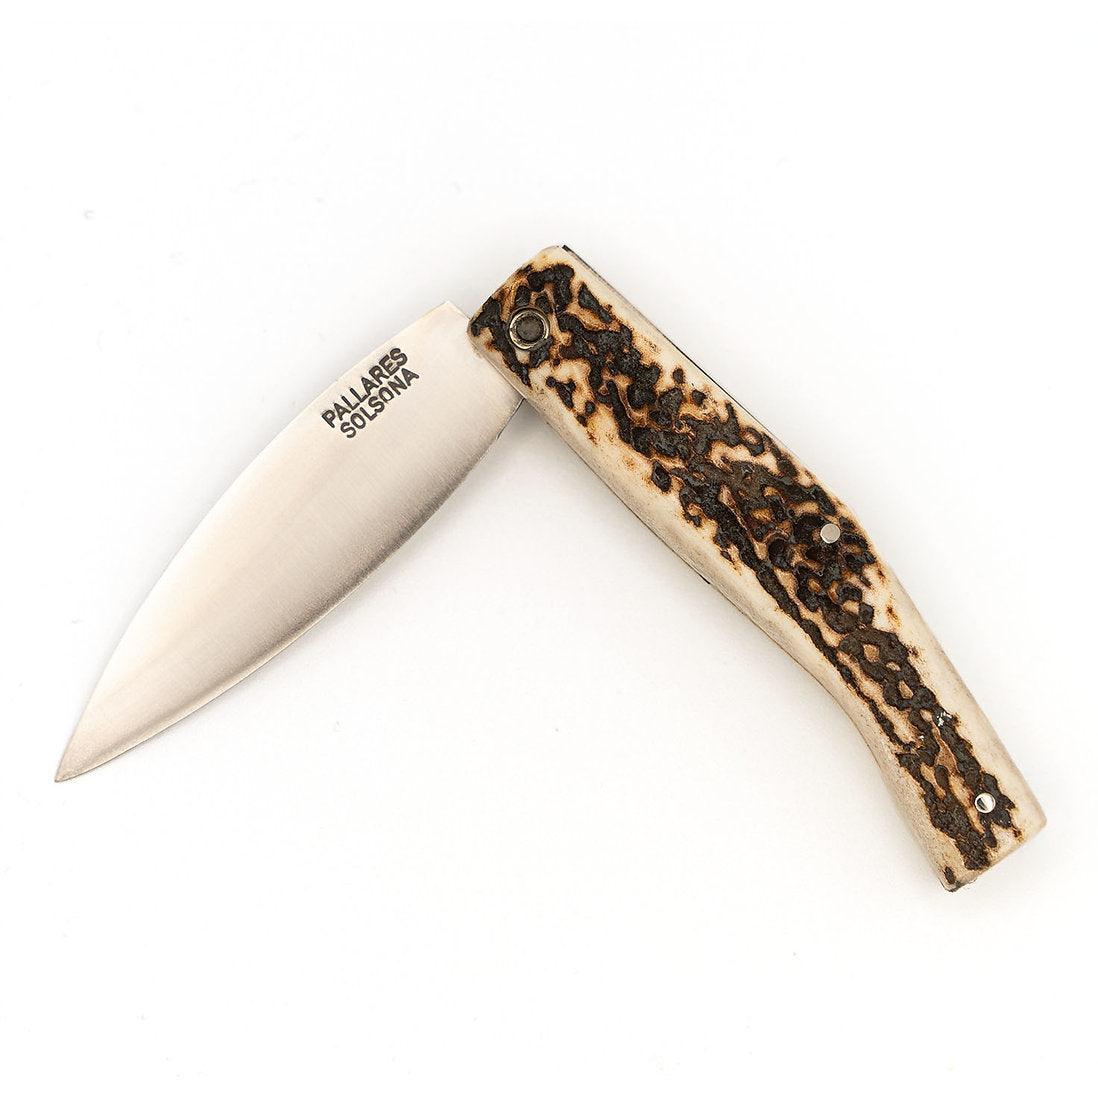 Busa Deer Horn Handle Pocket Knife - Stainless Steel Blade